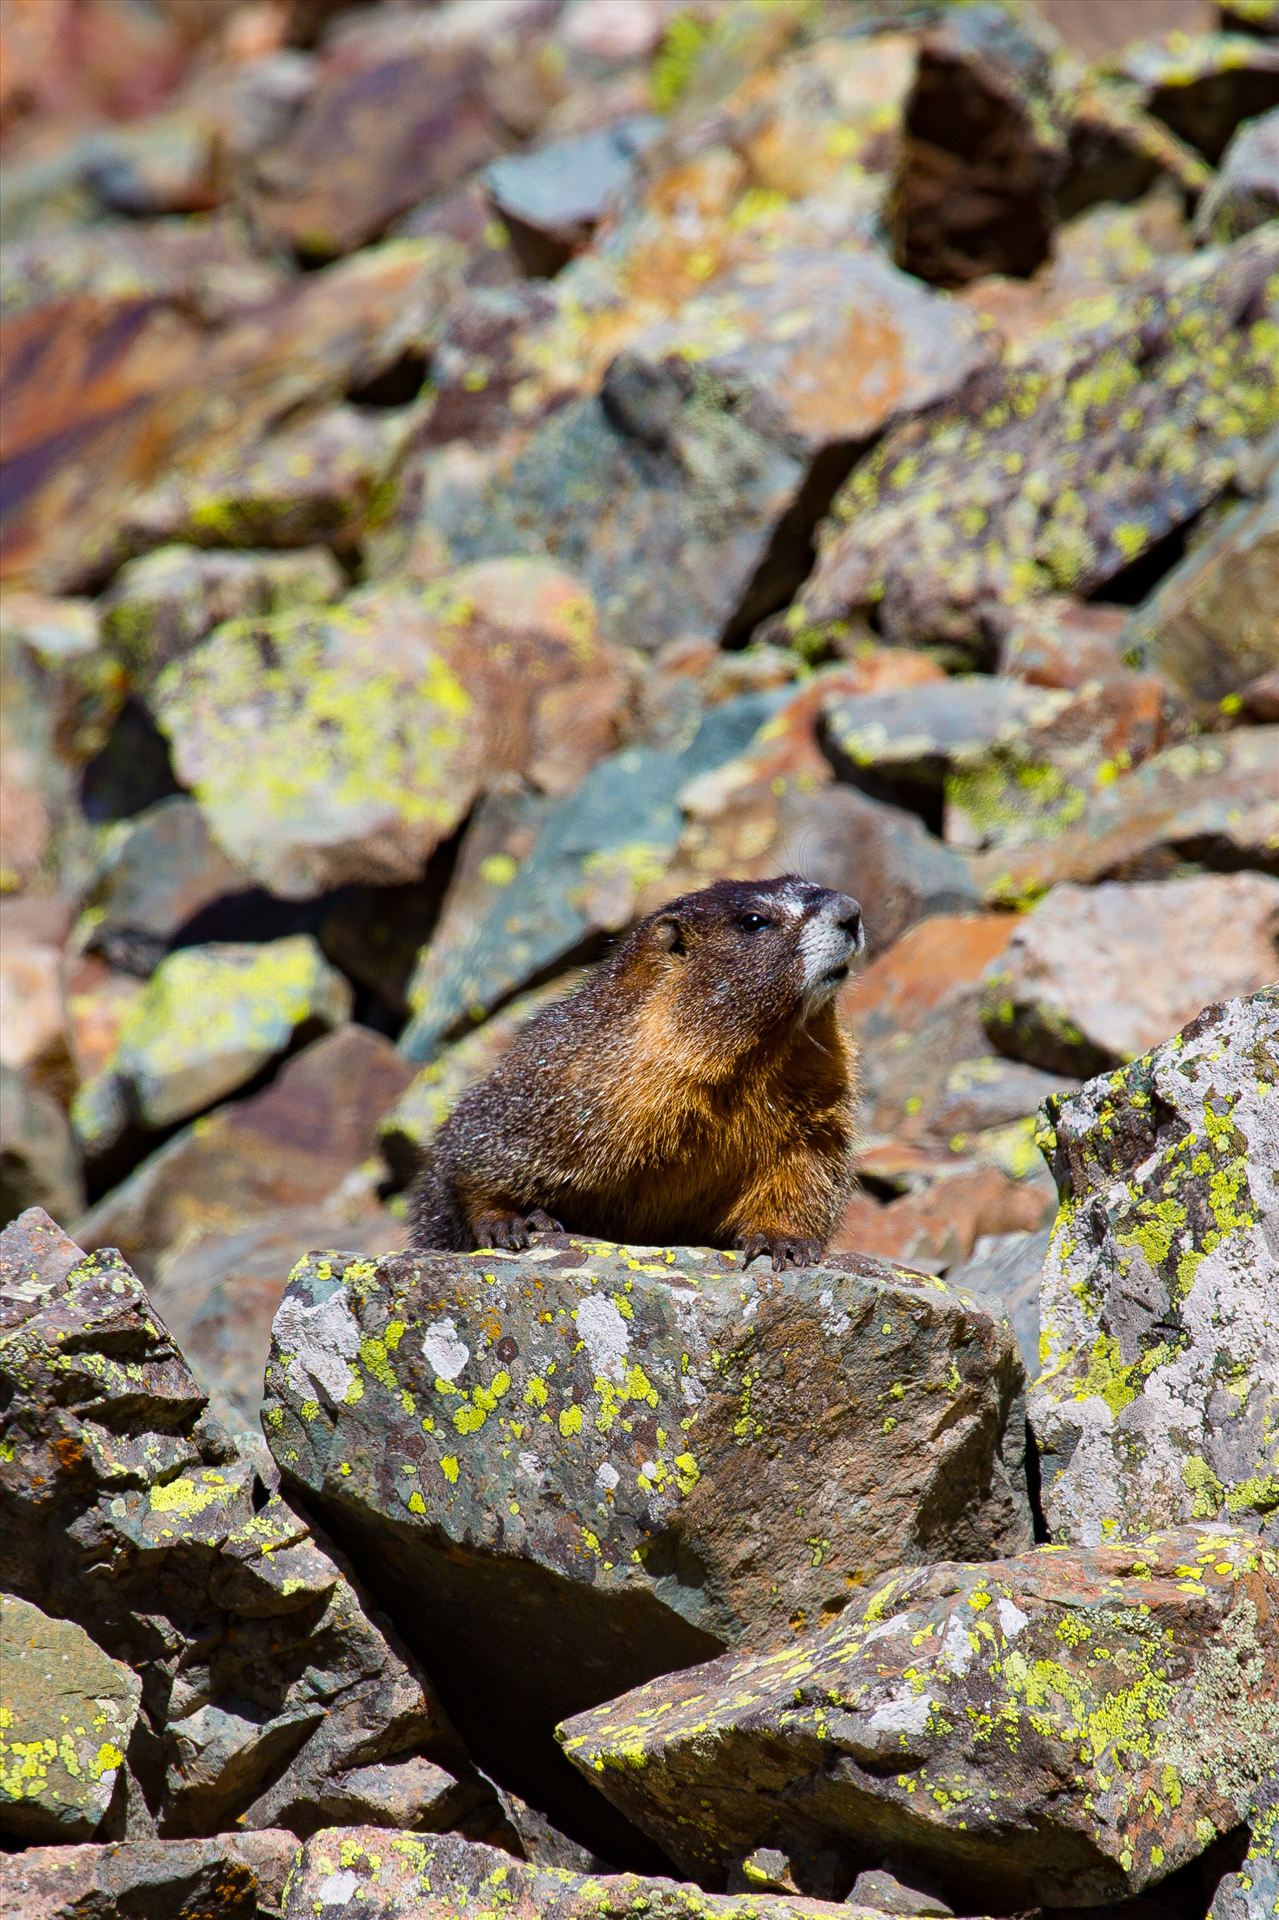 Ophir Pass Marmot - A marmot looks for snacks on Ophir Pass, near Ophir Colorado. by Scott Smith Photos